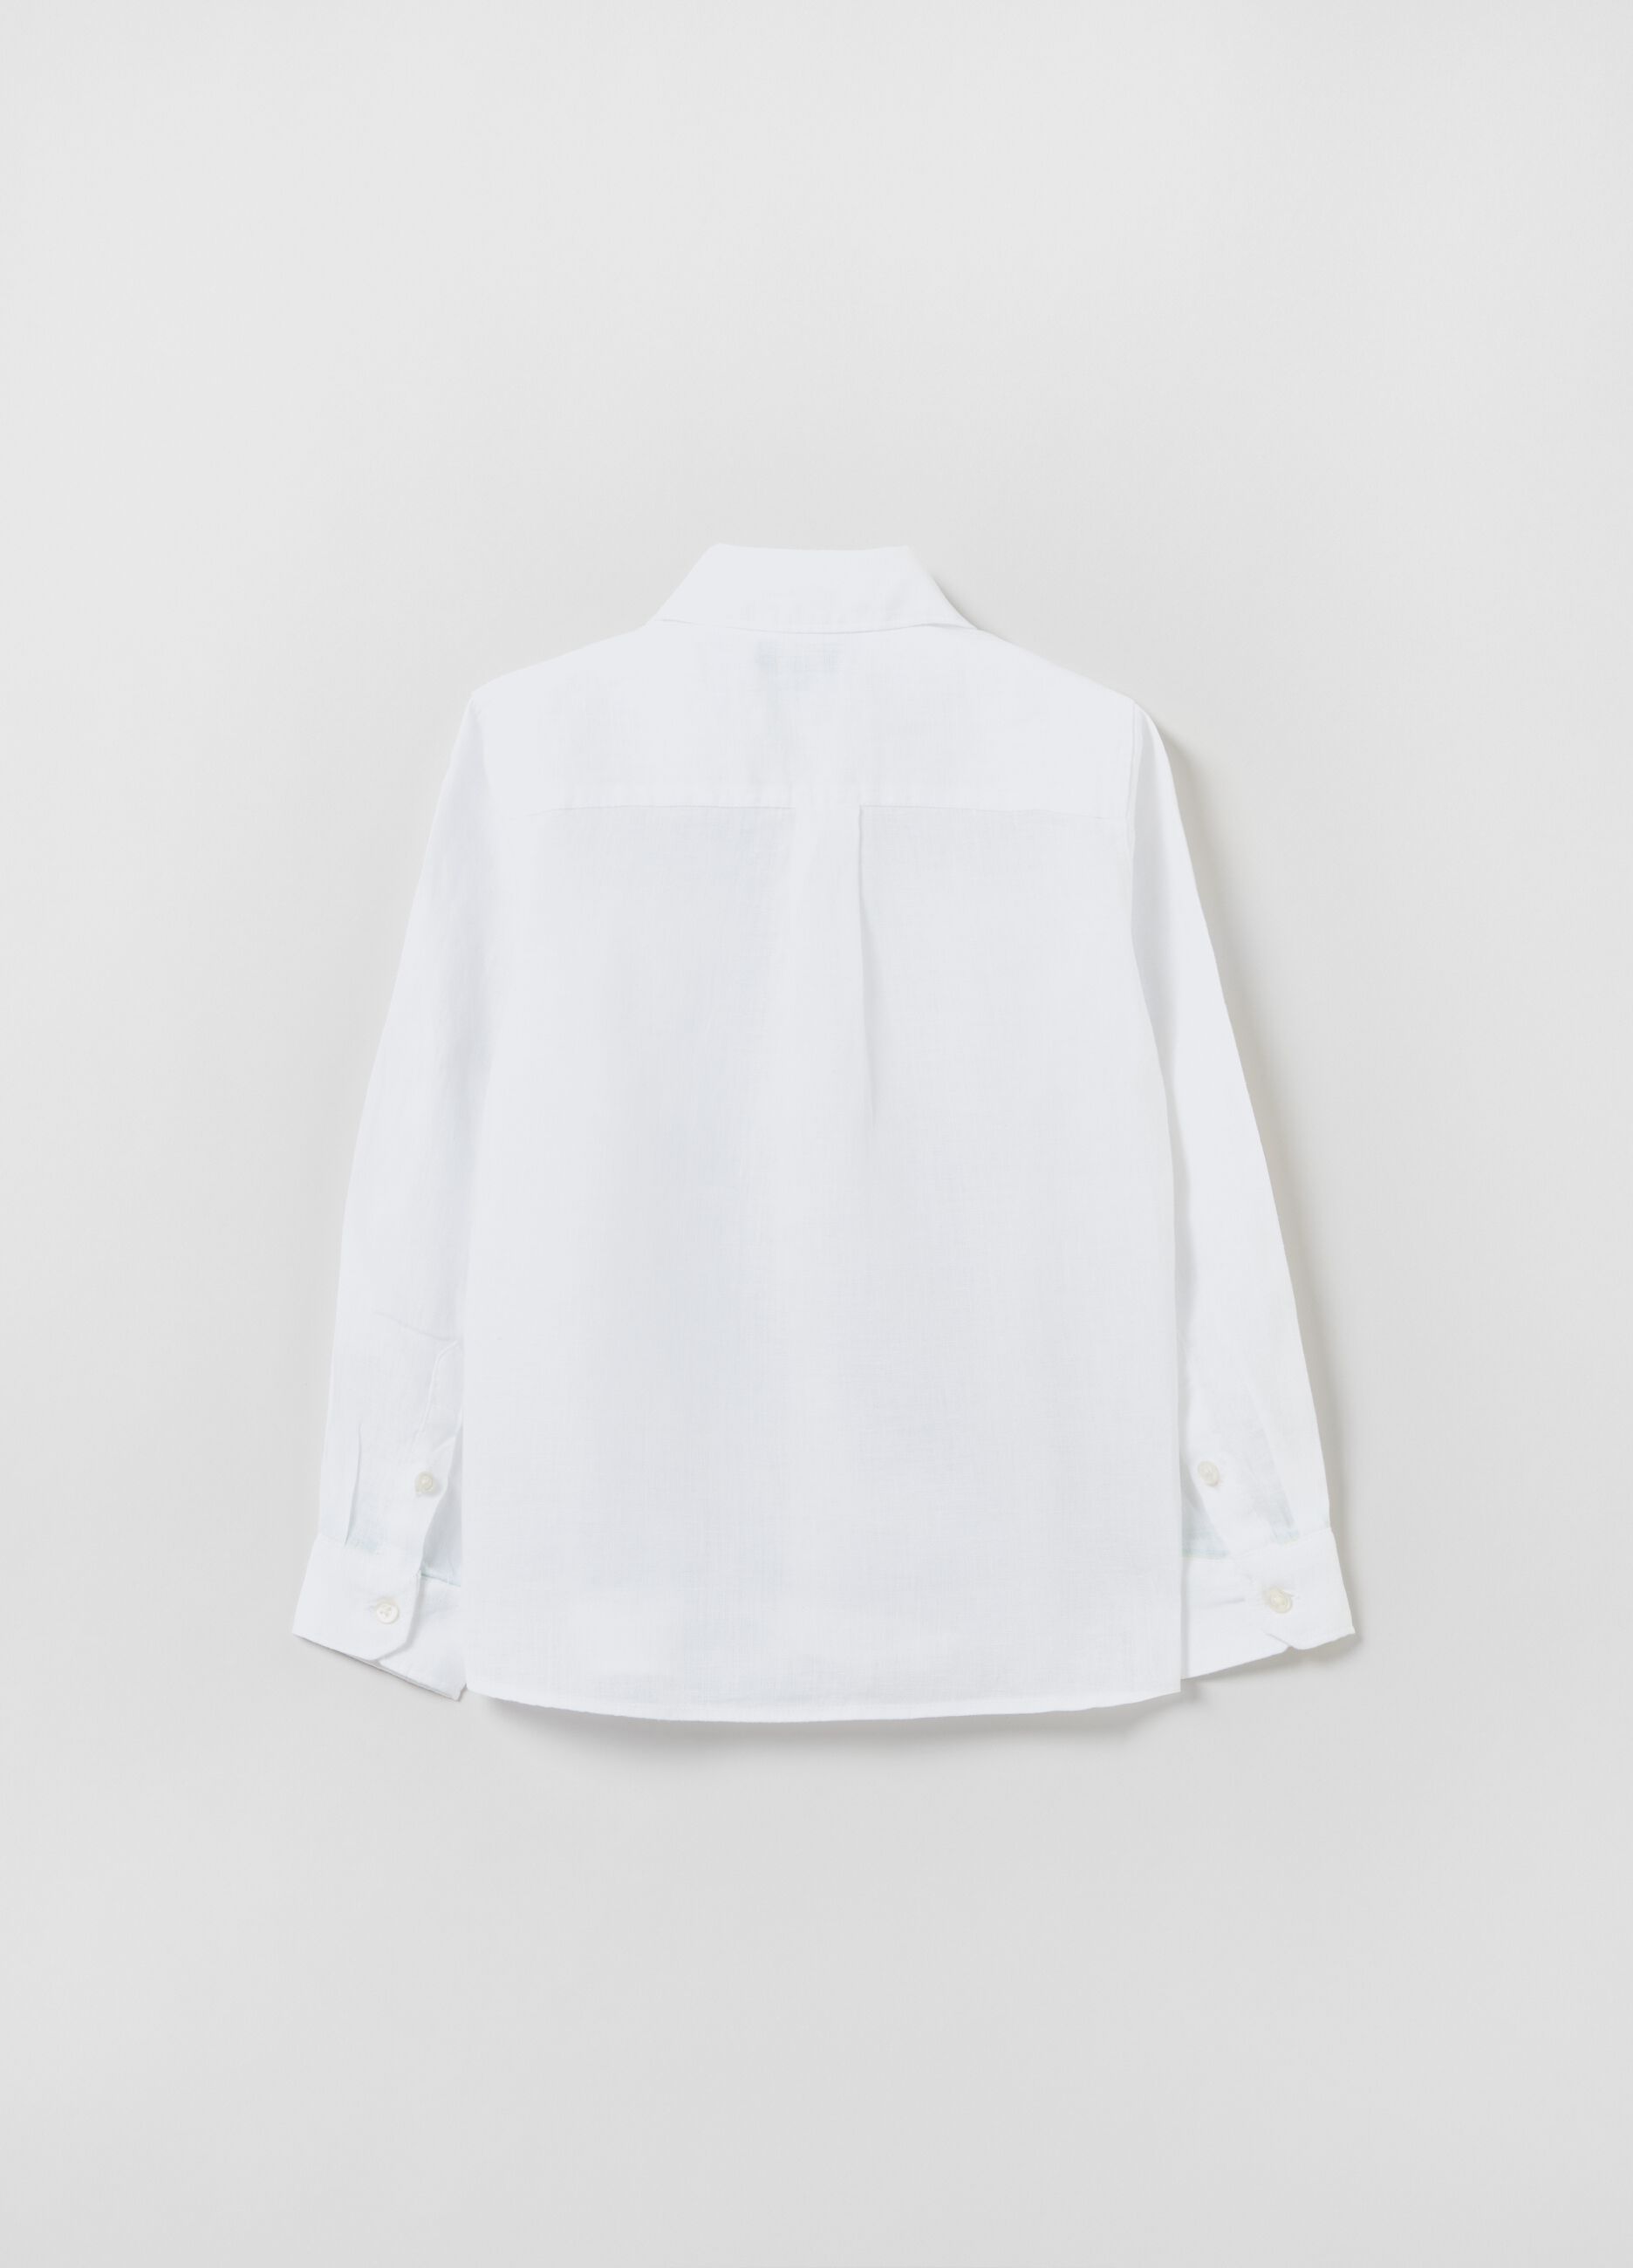 Linen shirt with pockets